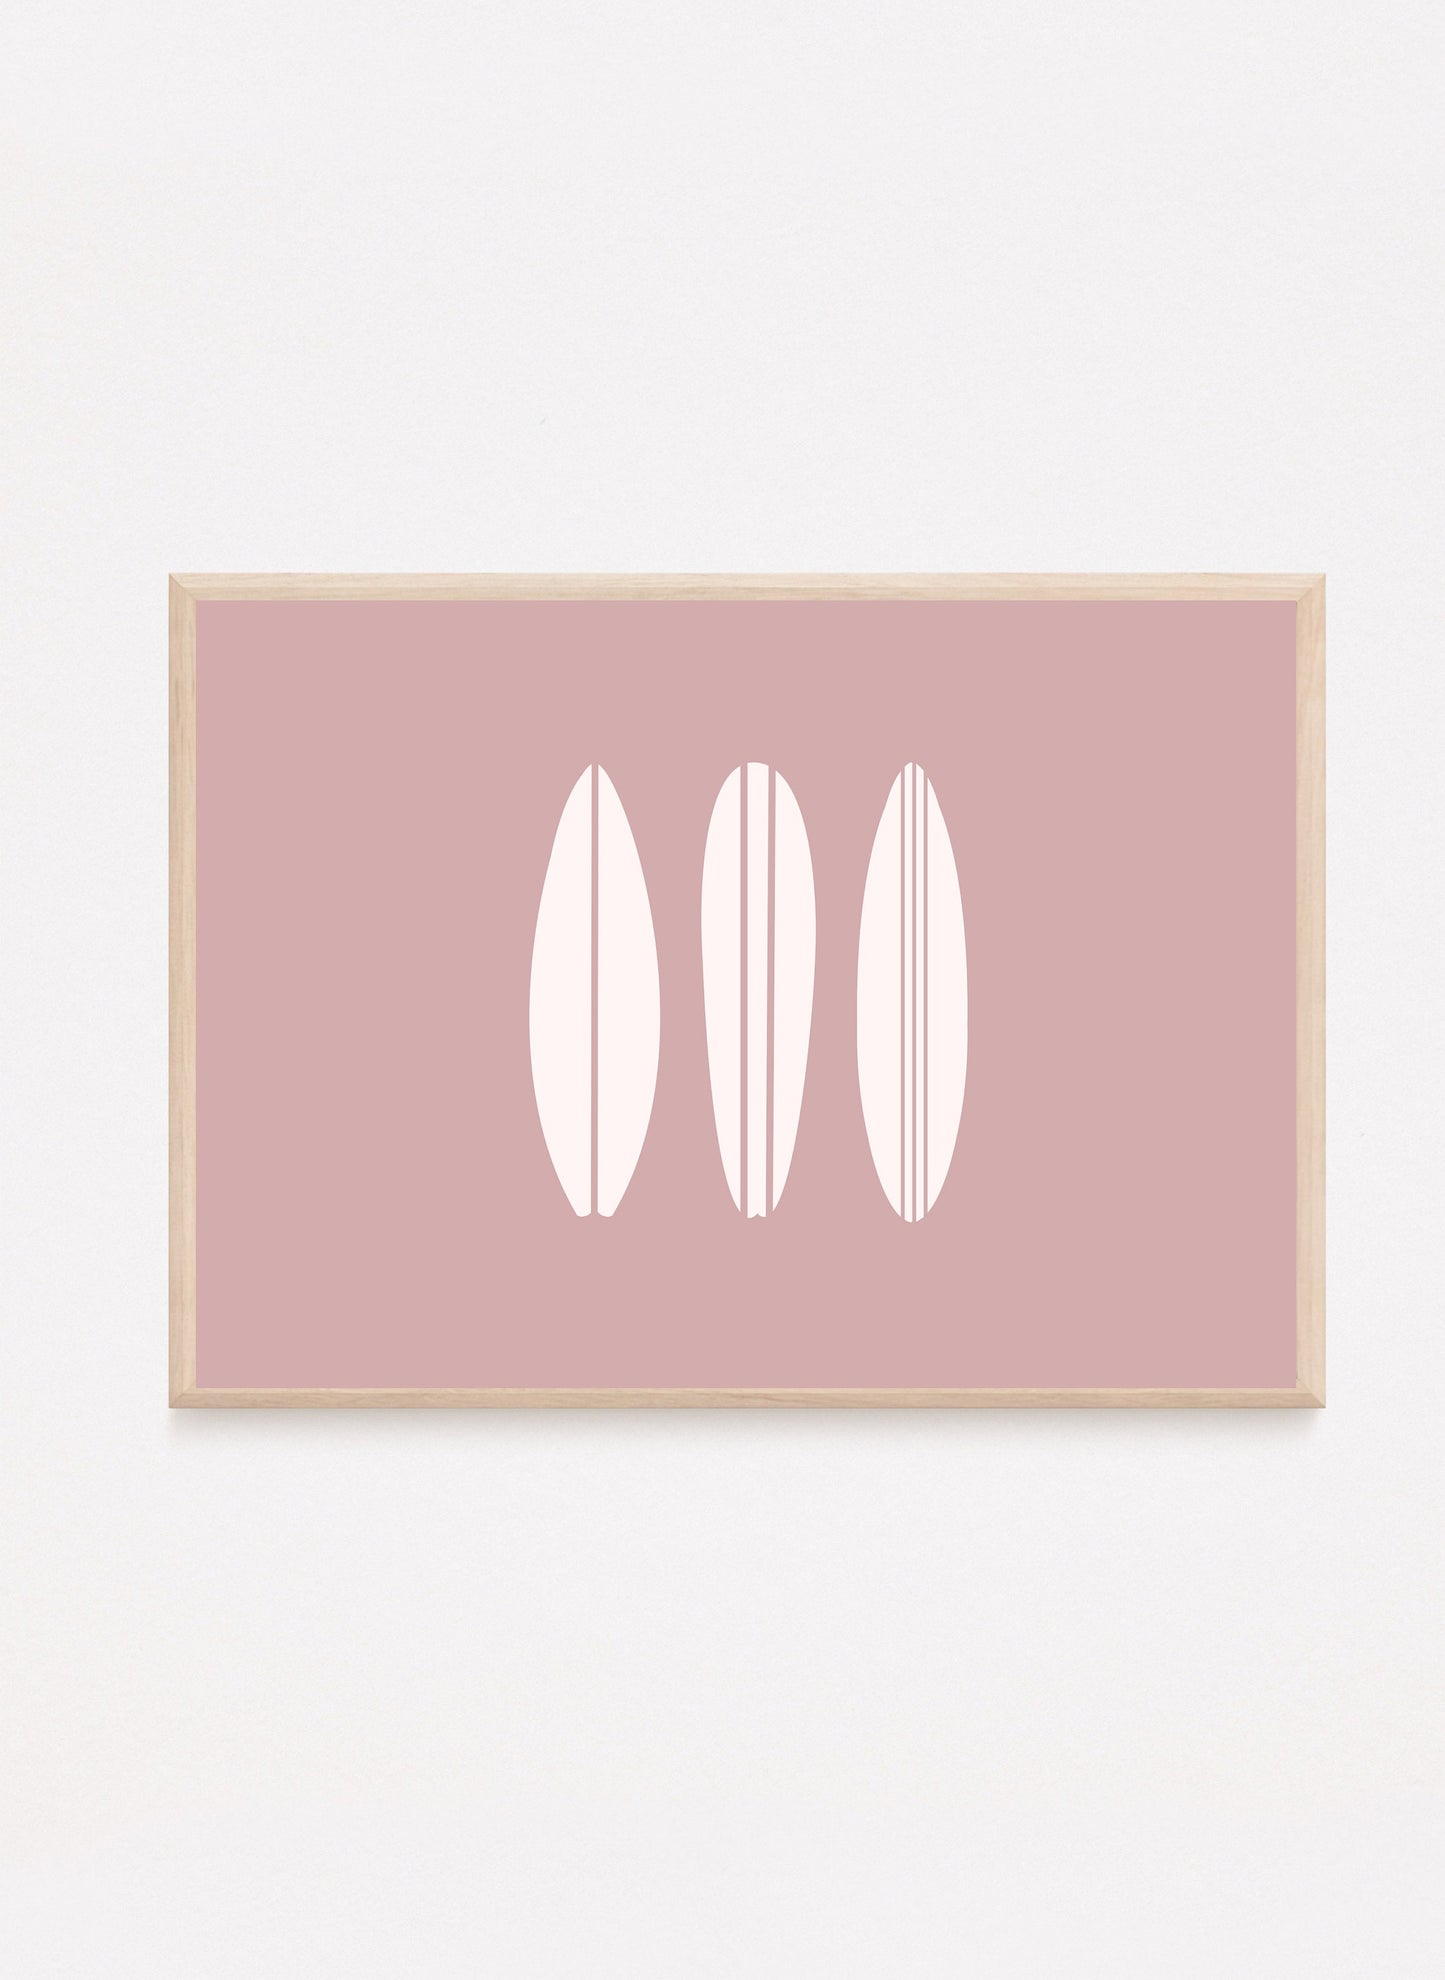 Boho Pink Surf Gallery Wall Art Set of 6 prints